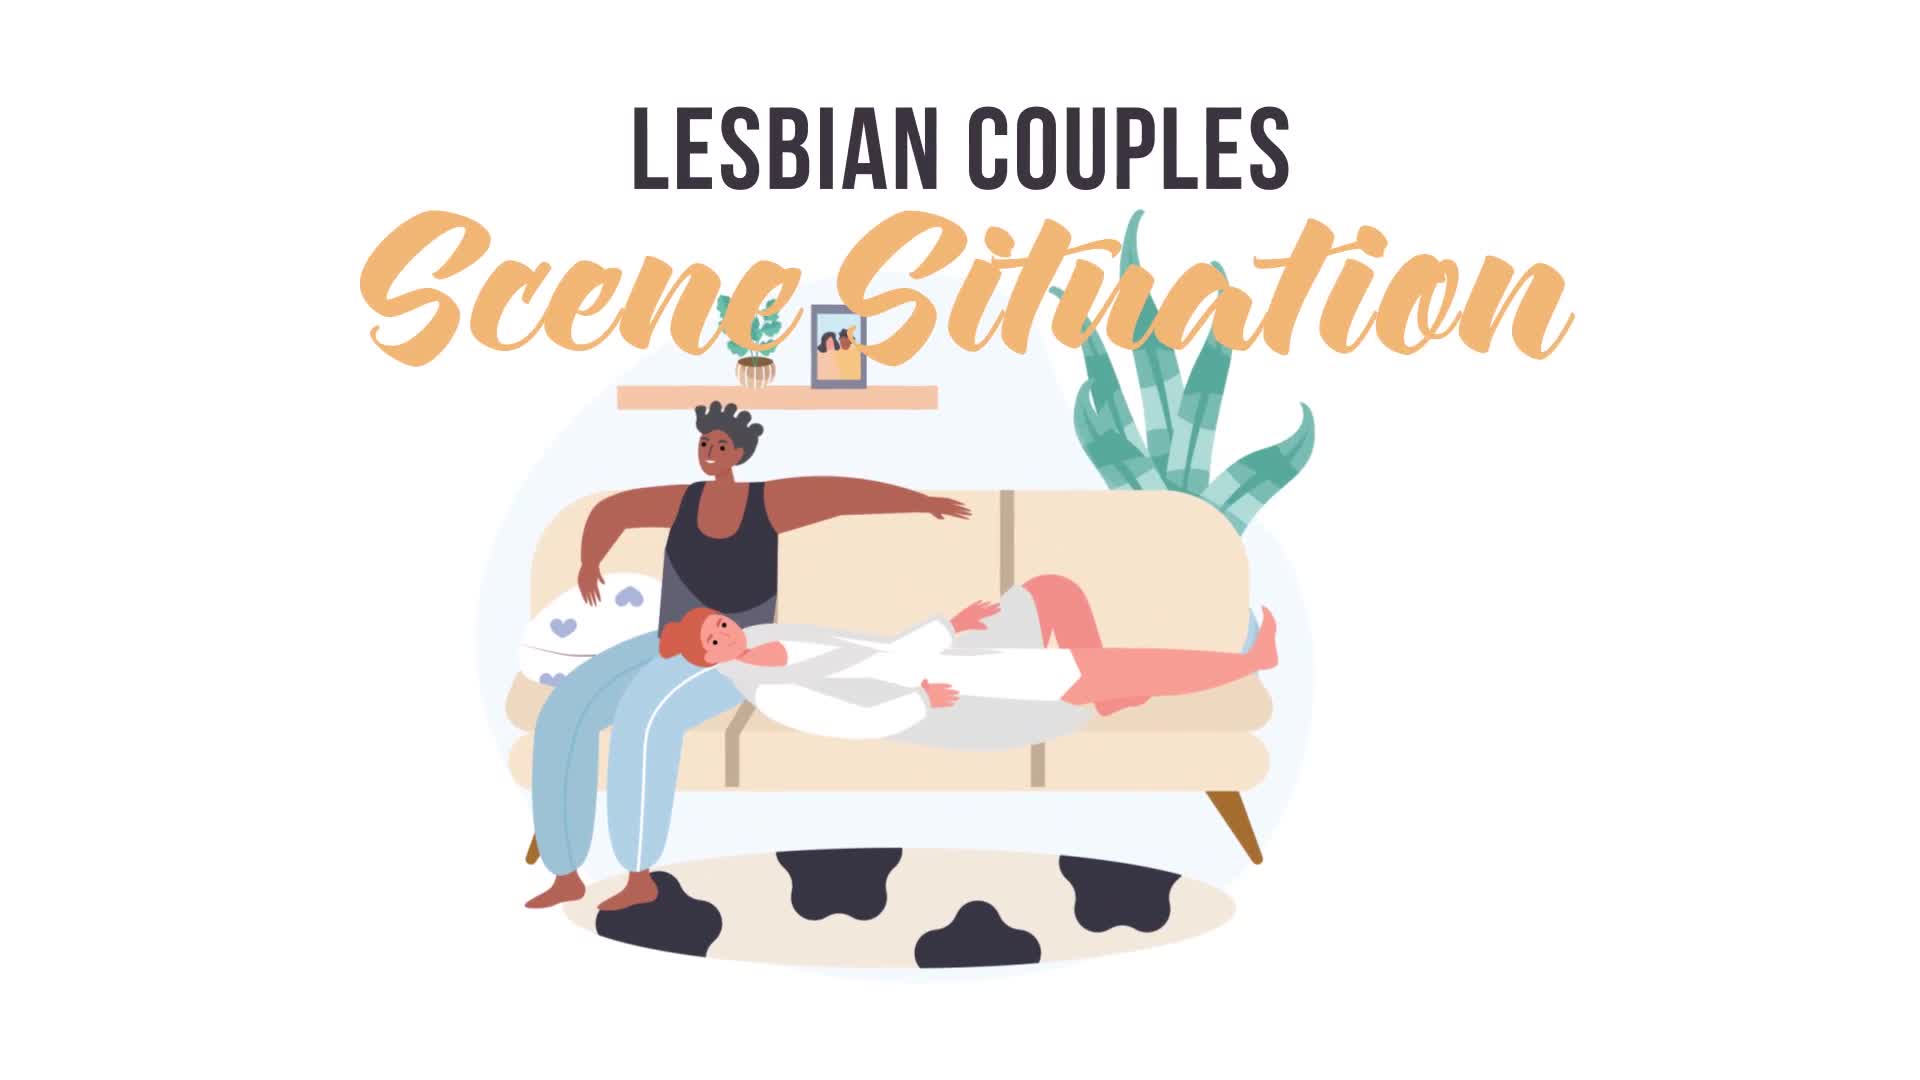 Lesbian Video Free Download